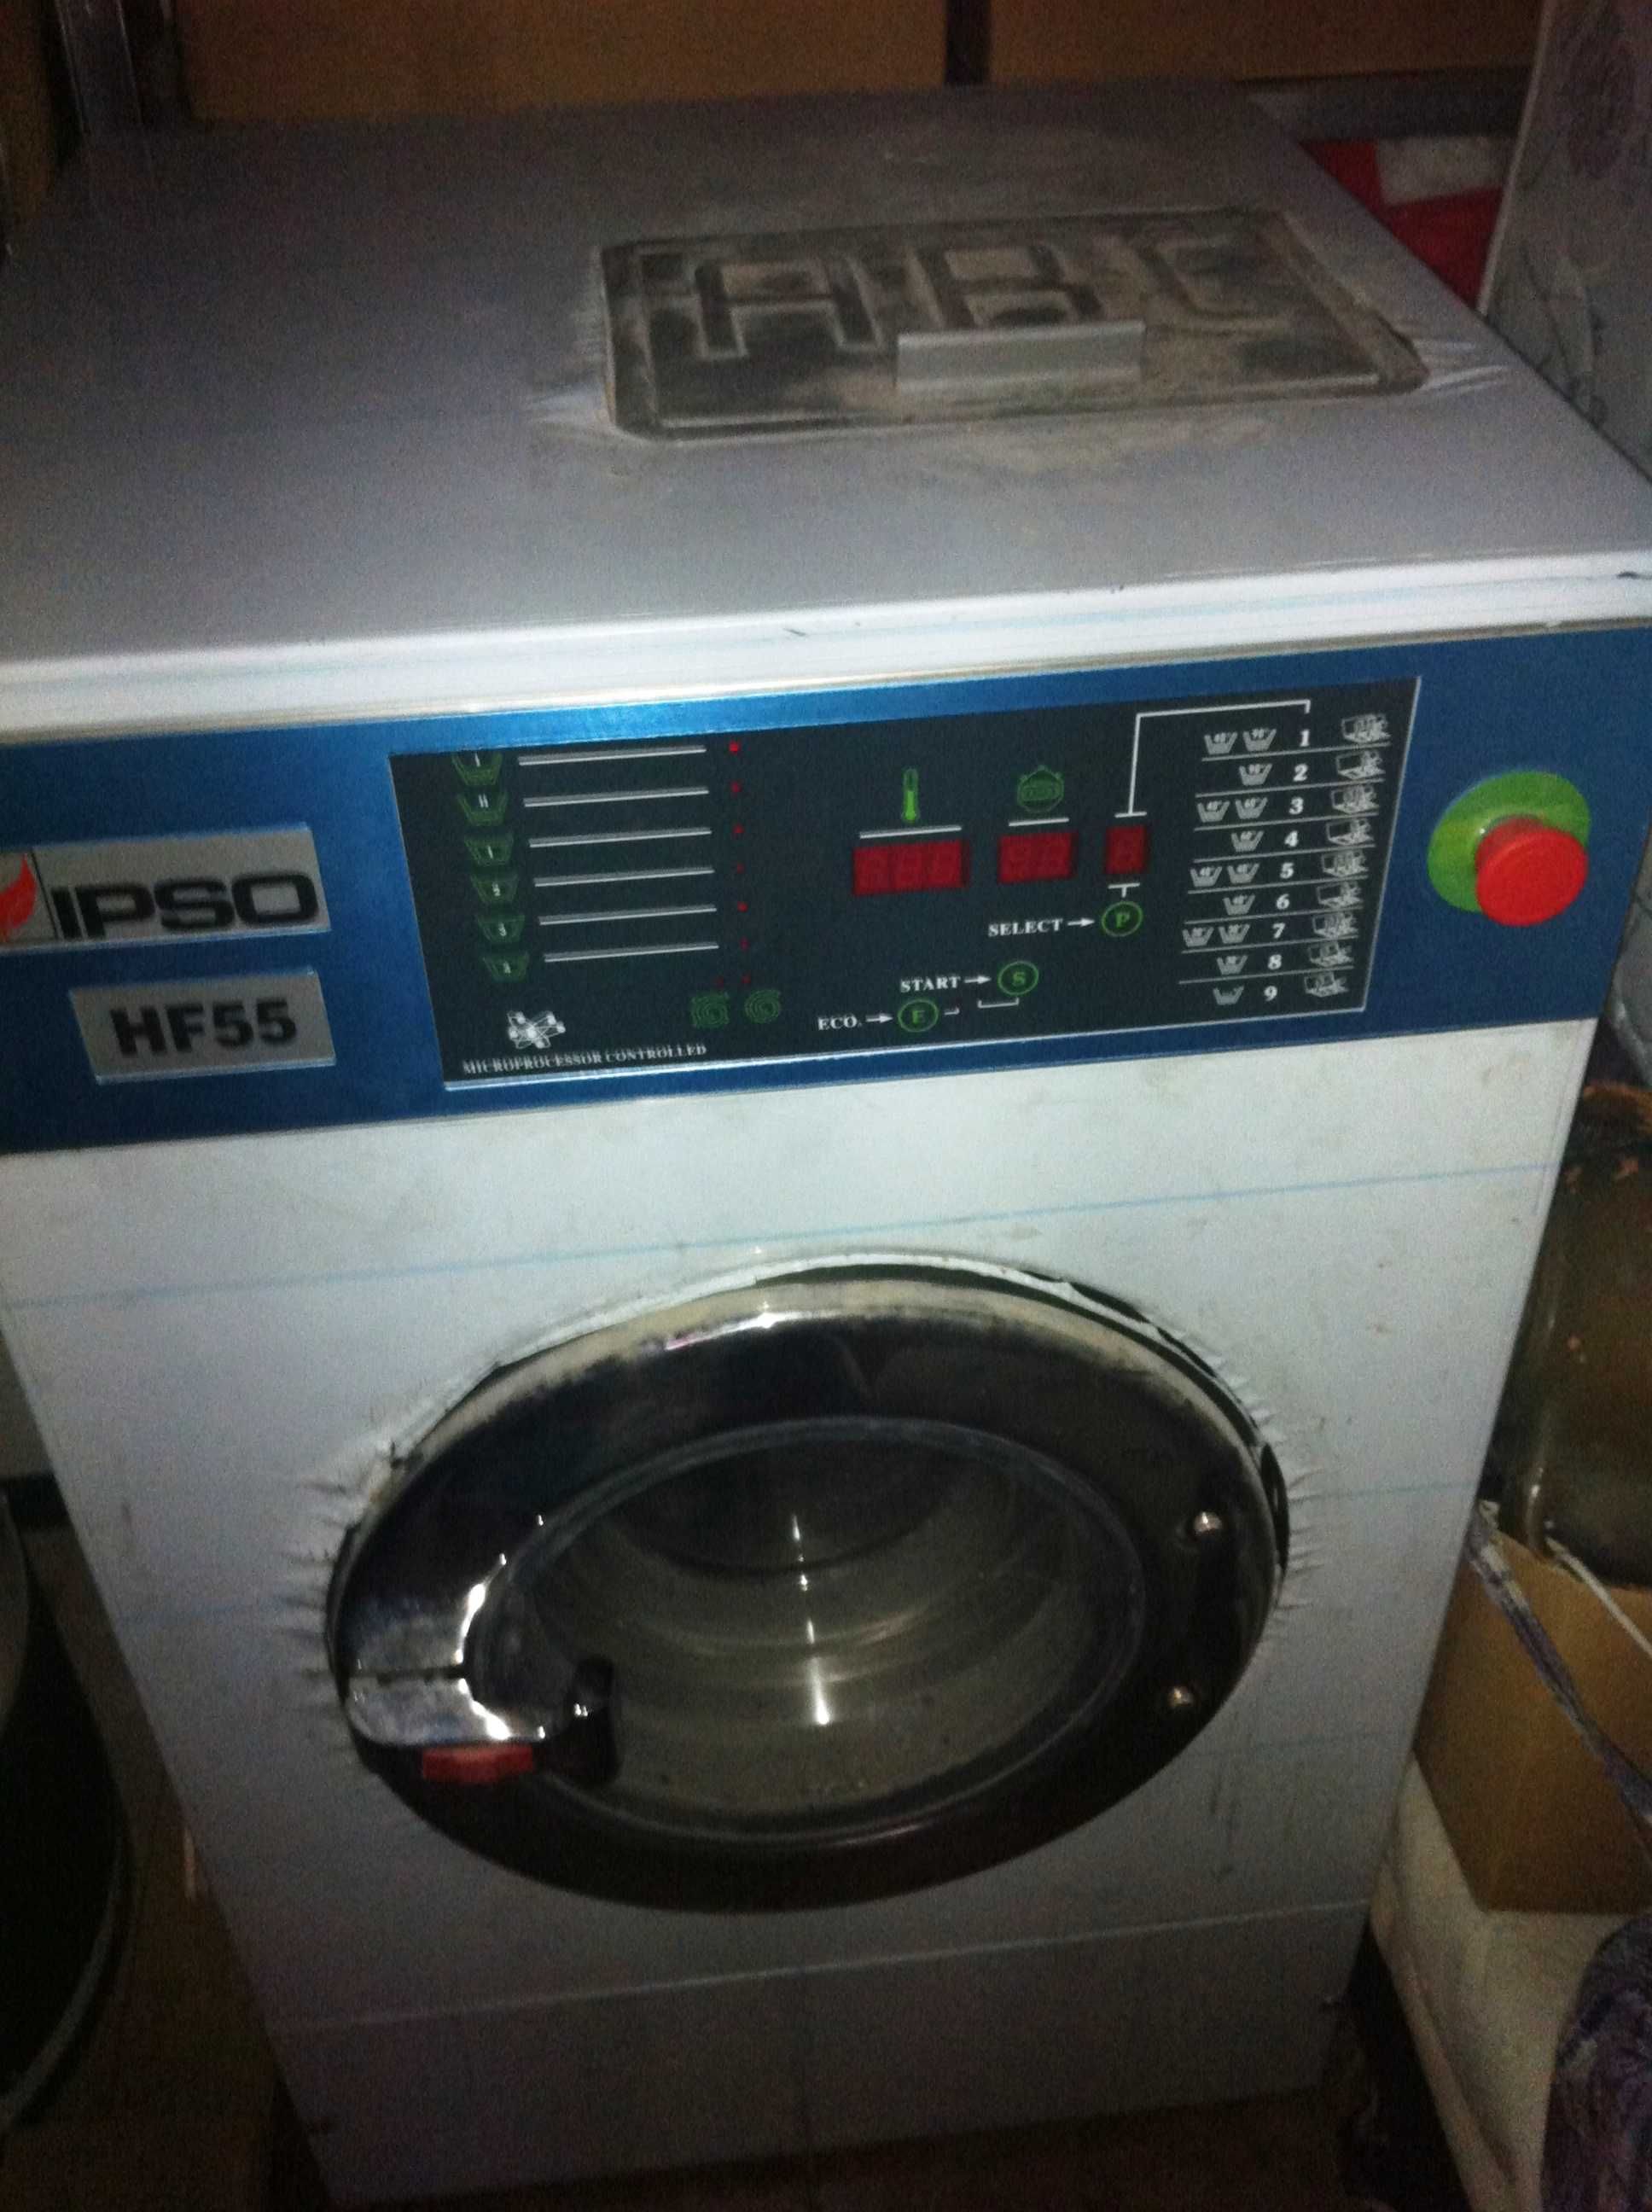 Професионална пералня IPSO HF55